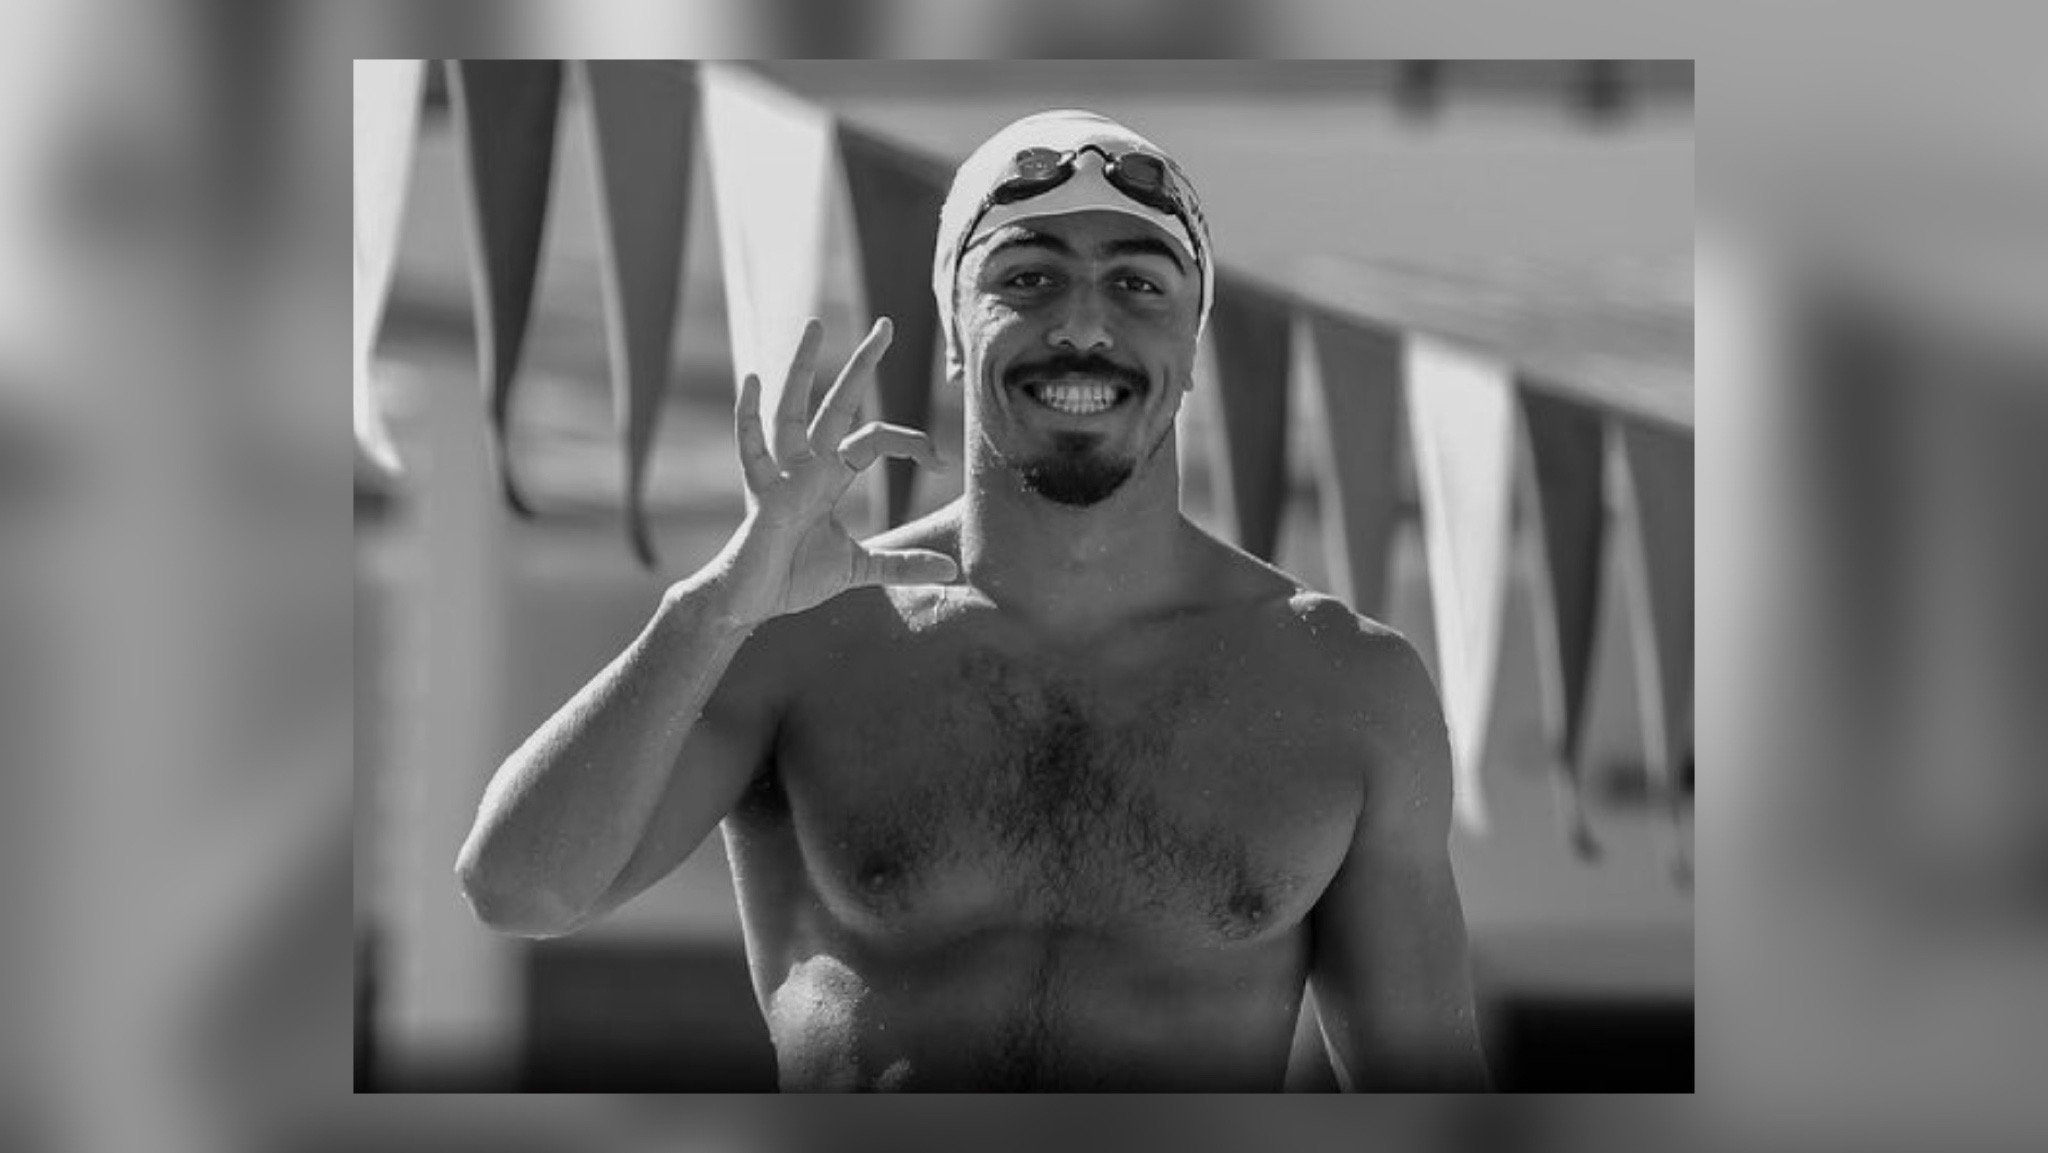 23-year-old-university-of-arizona-swimmer-ty-wells-dies-‘suddenly’